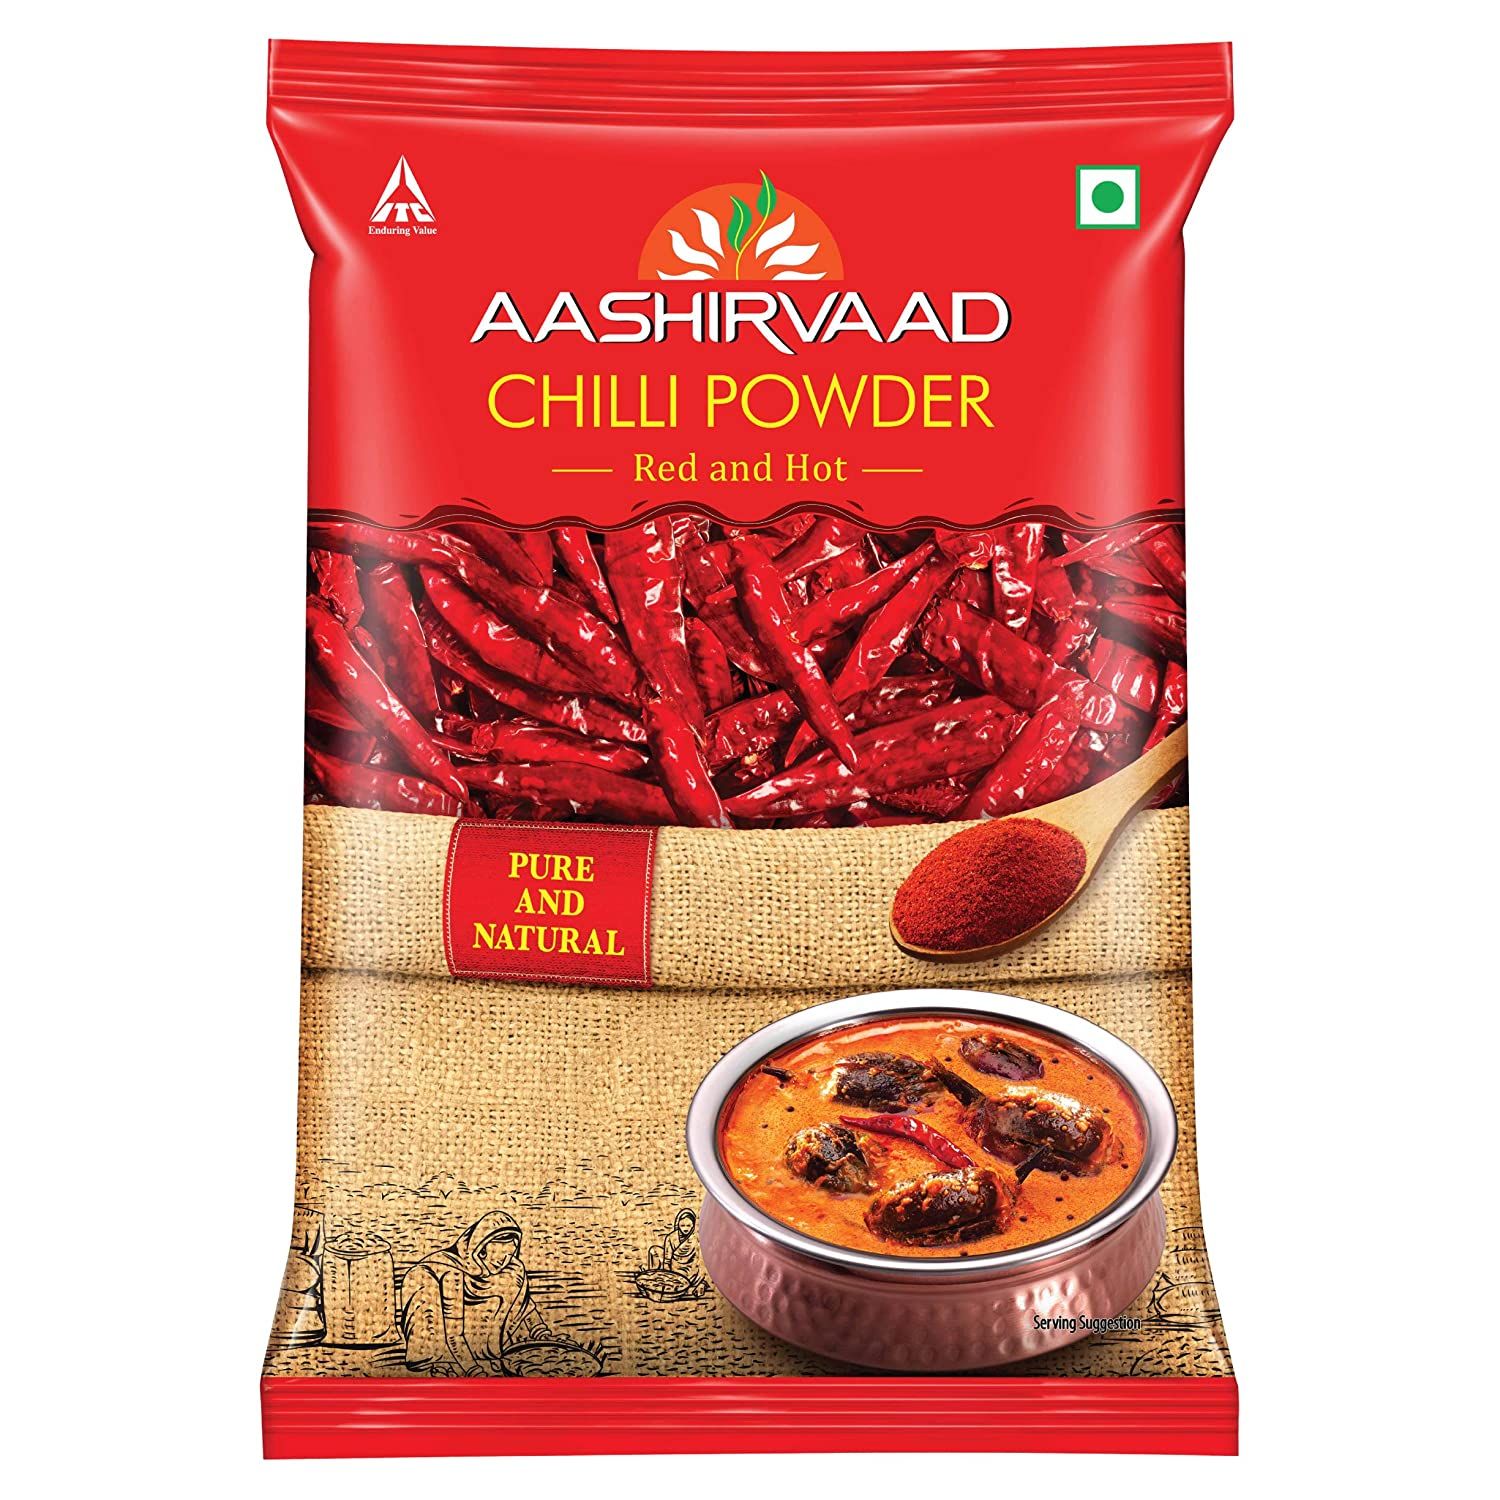 Aashirvaad Chilli Powder Image